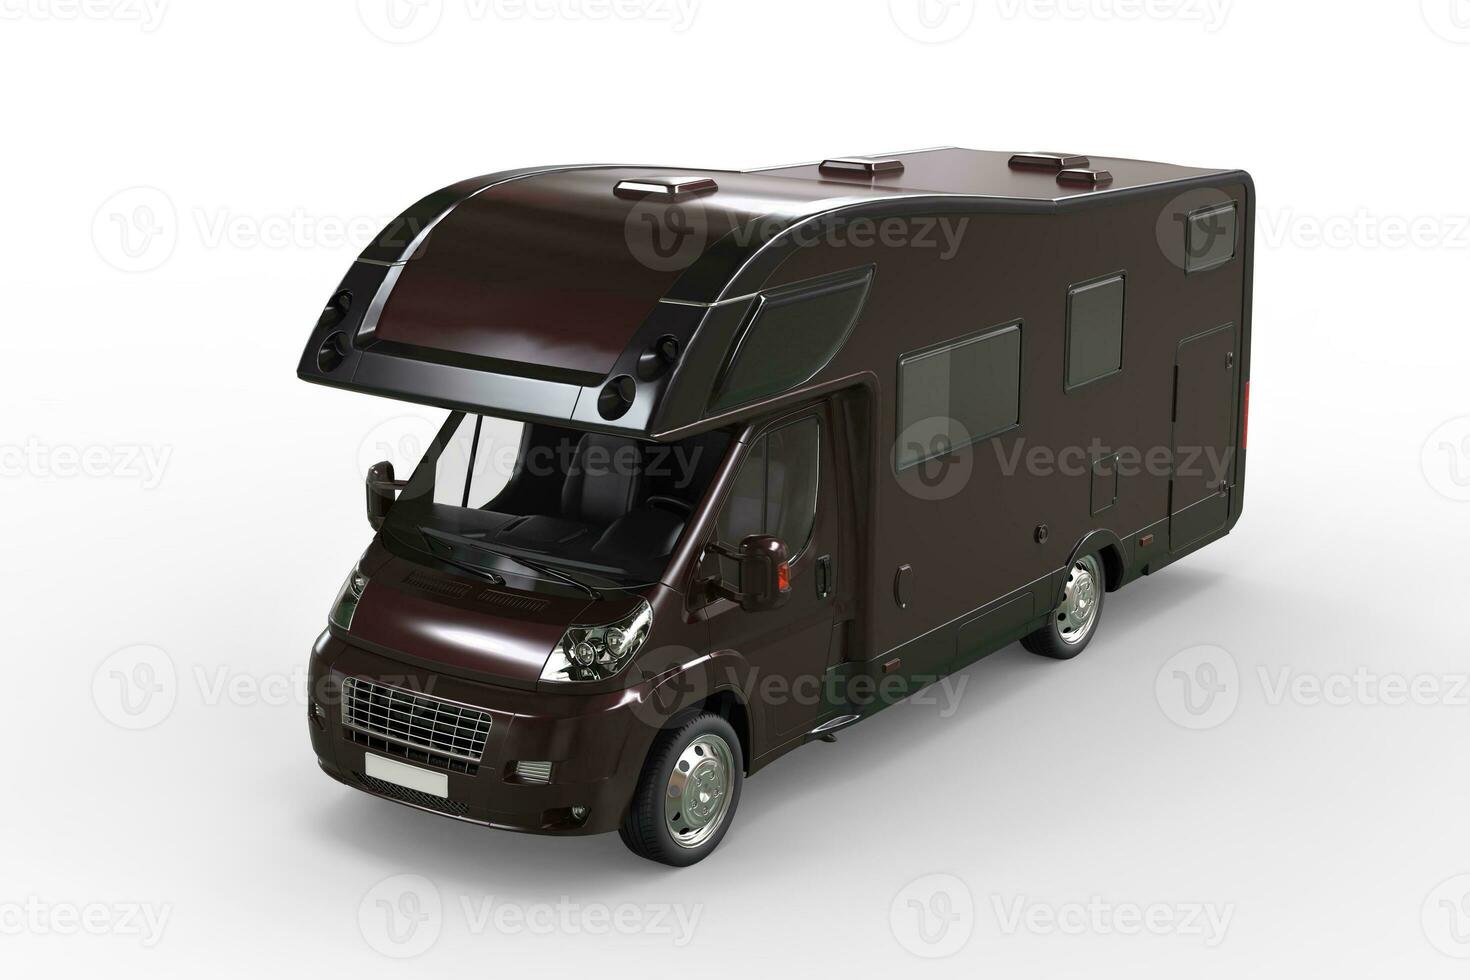 oscuro marrón camper camioneta - parte superior ver - aislado en blanco antecedentes foto